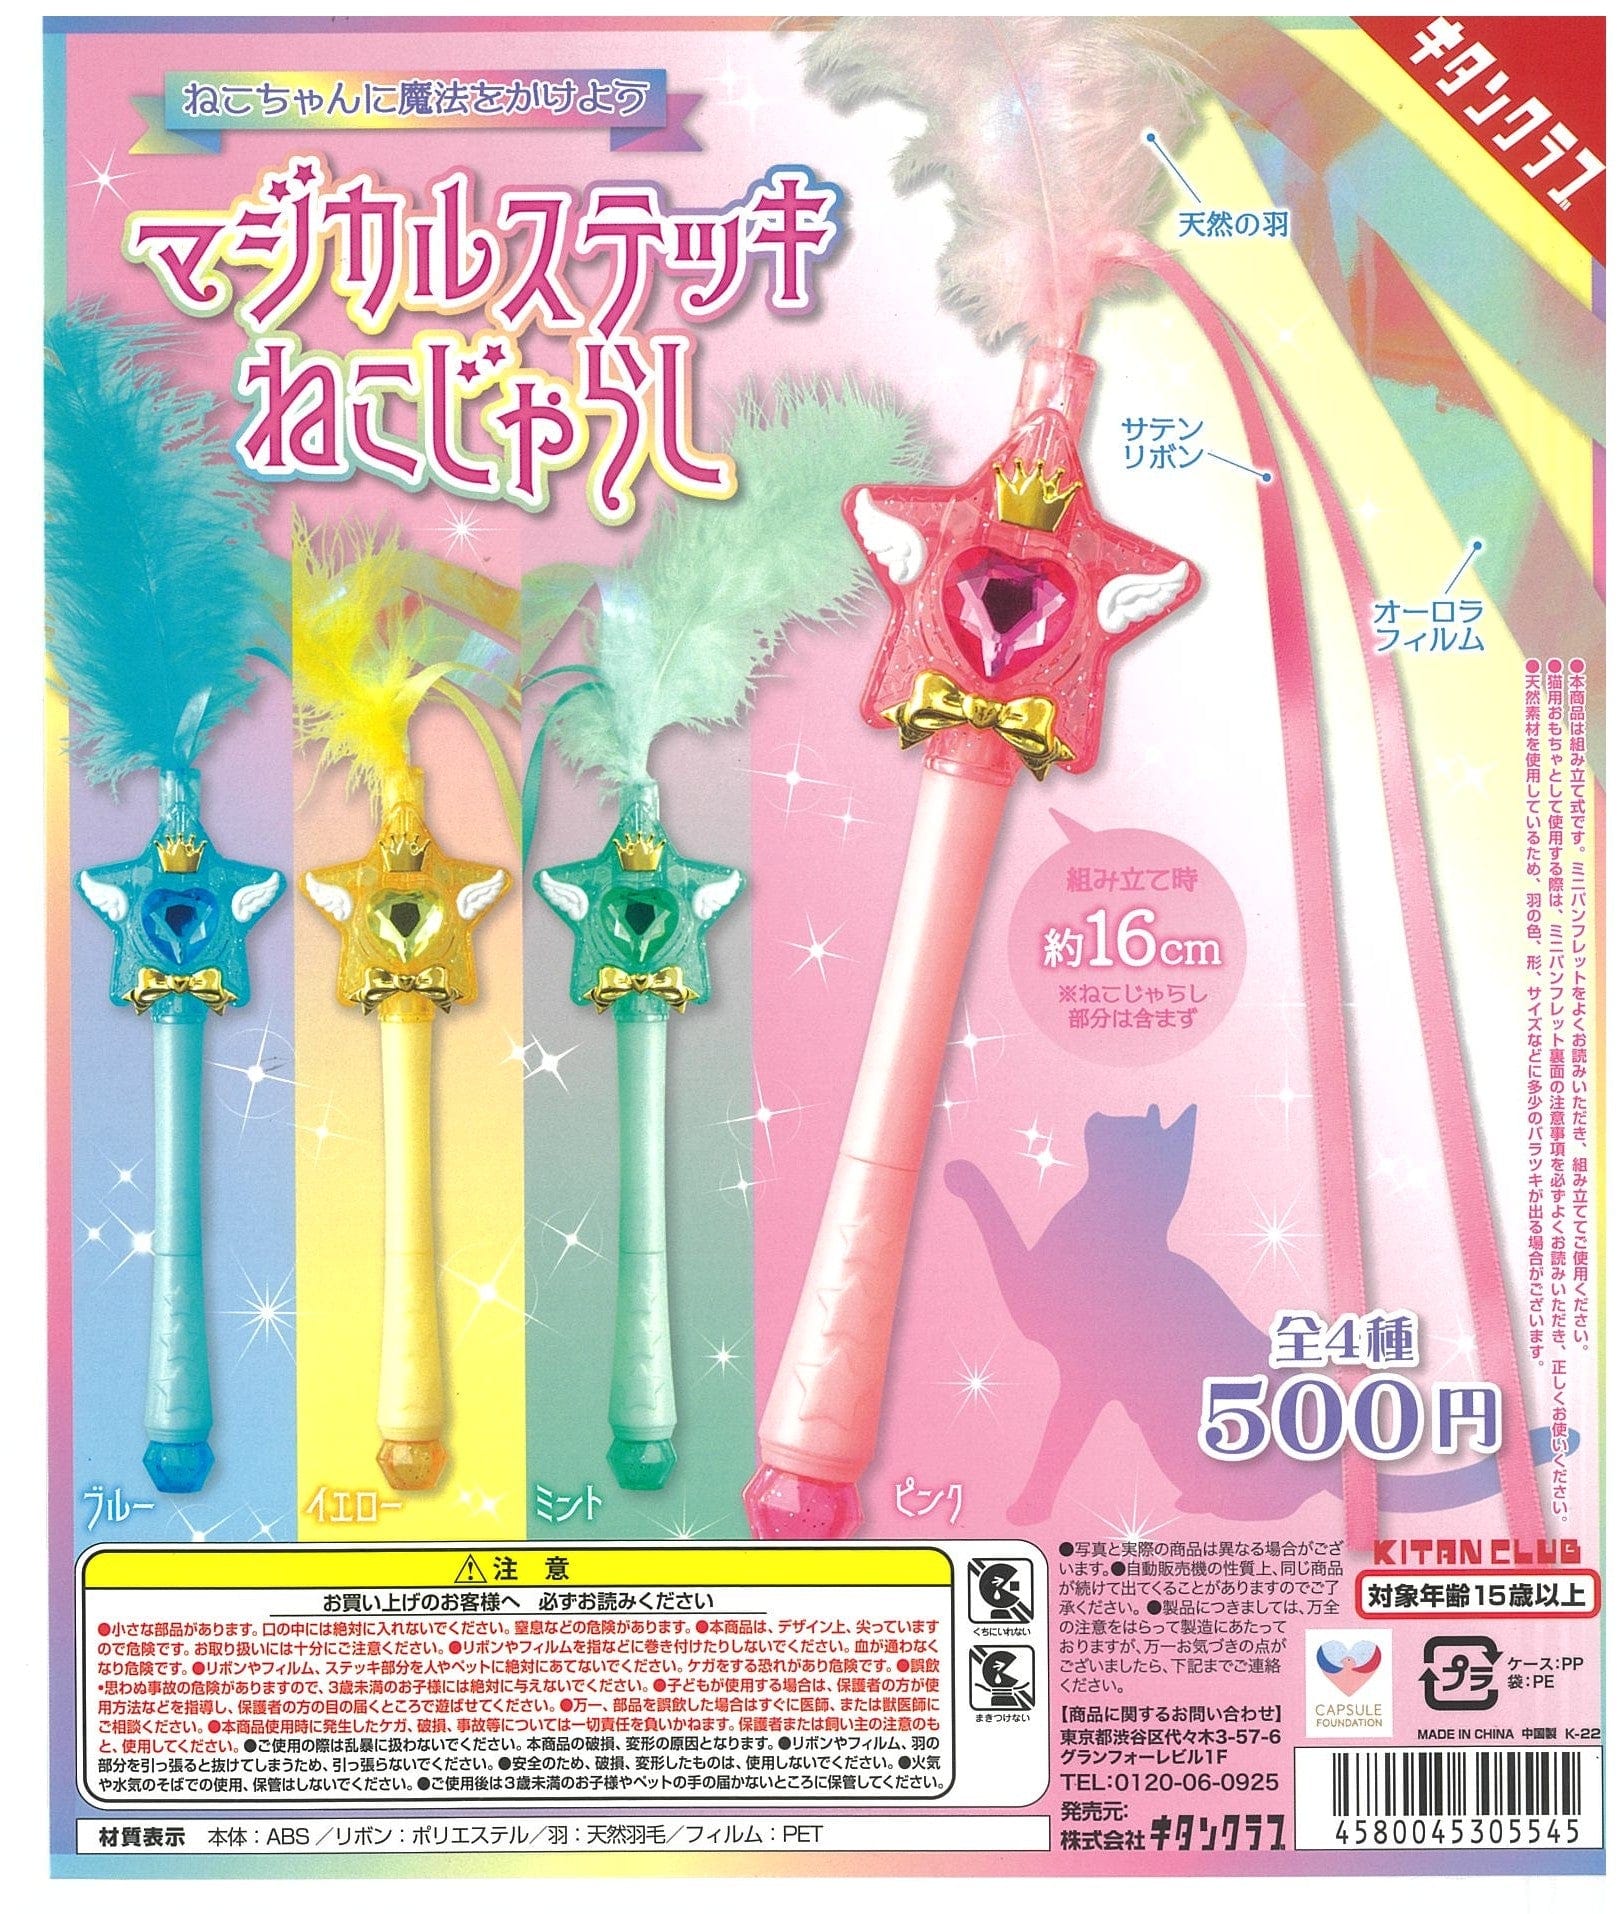 Kitan Club CP2039 Magical Stick Nekojarashi